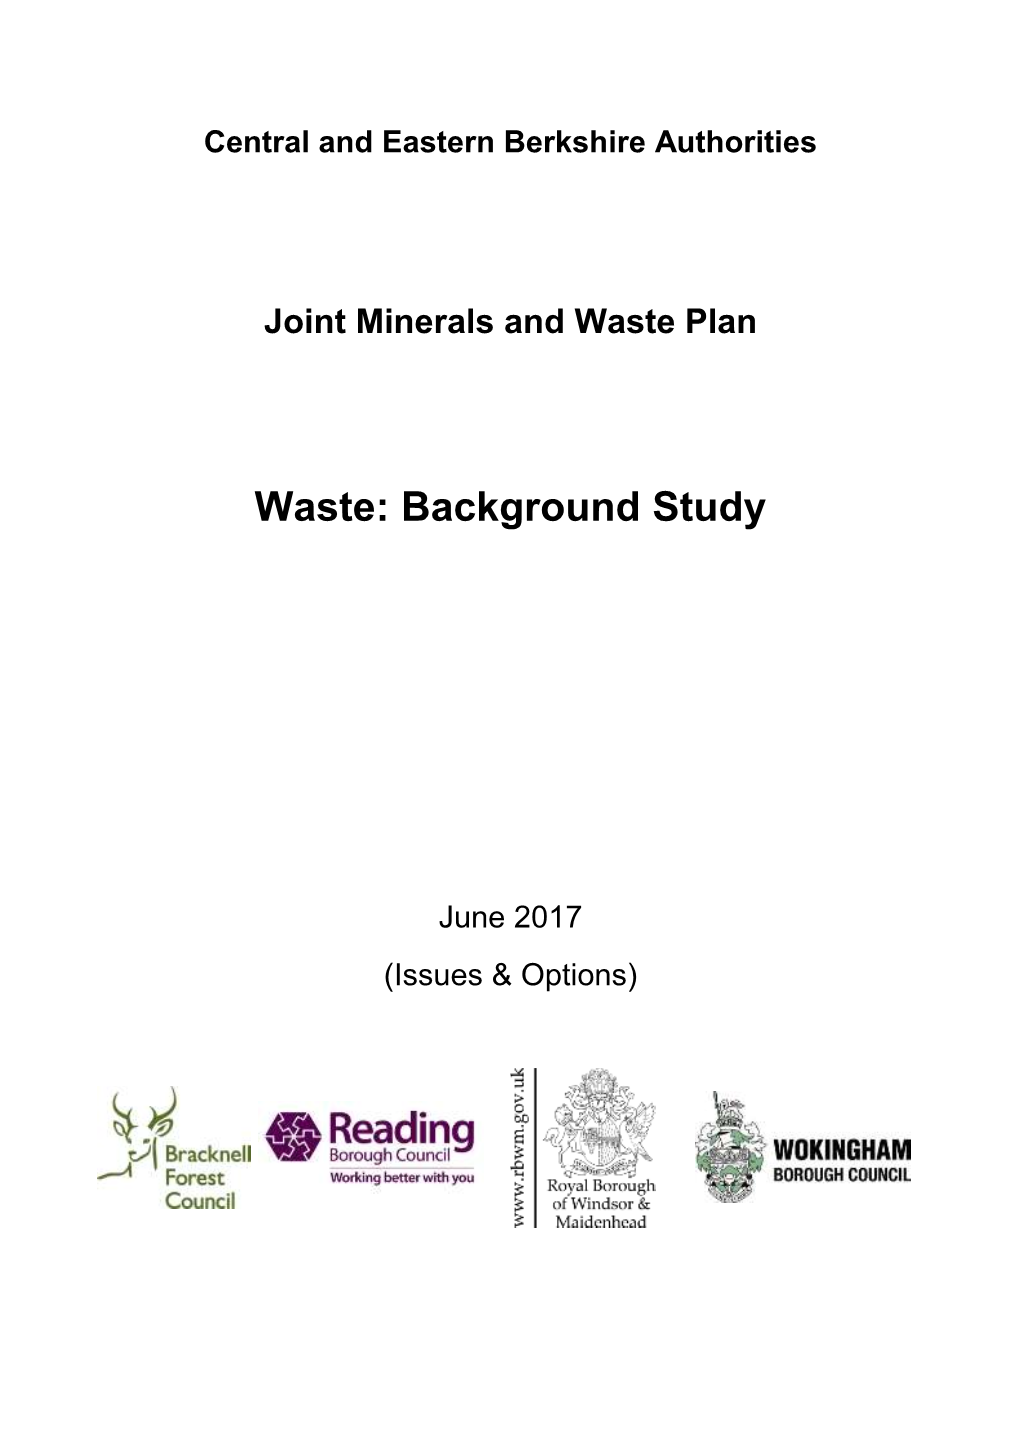 Waste: Background Study